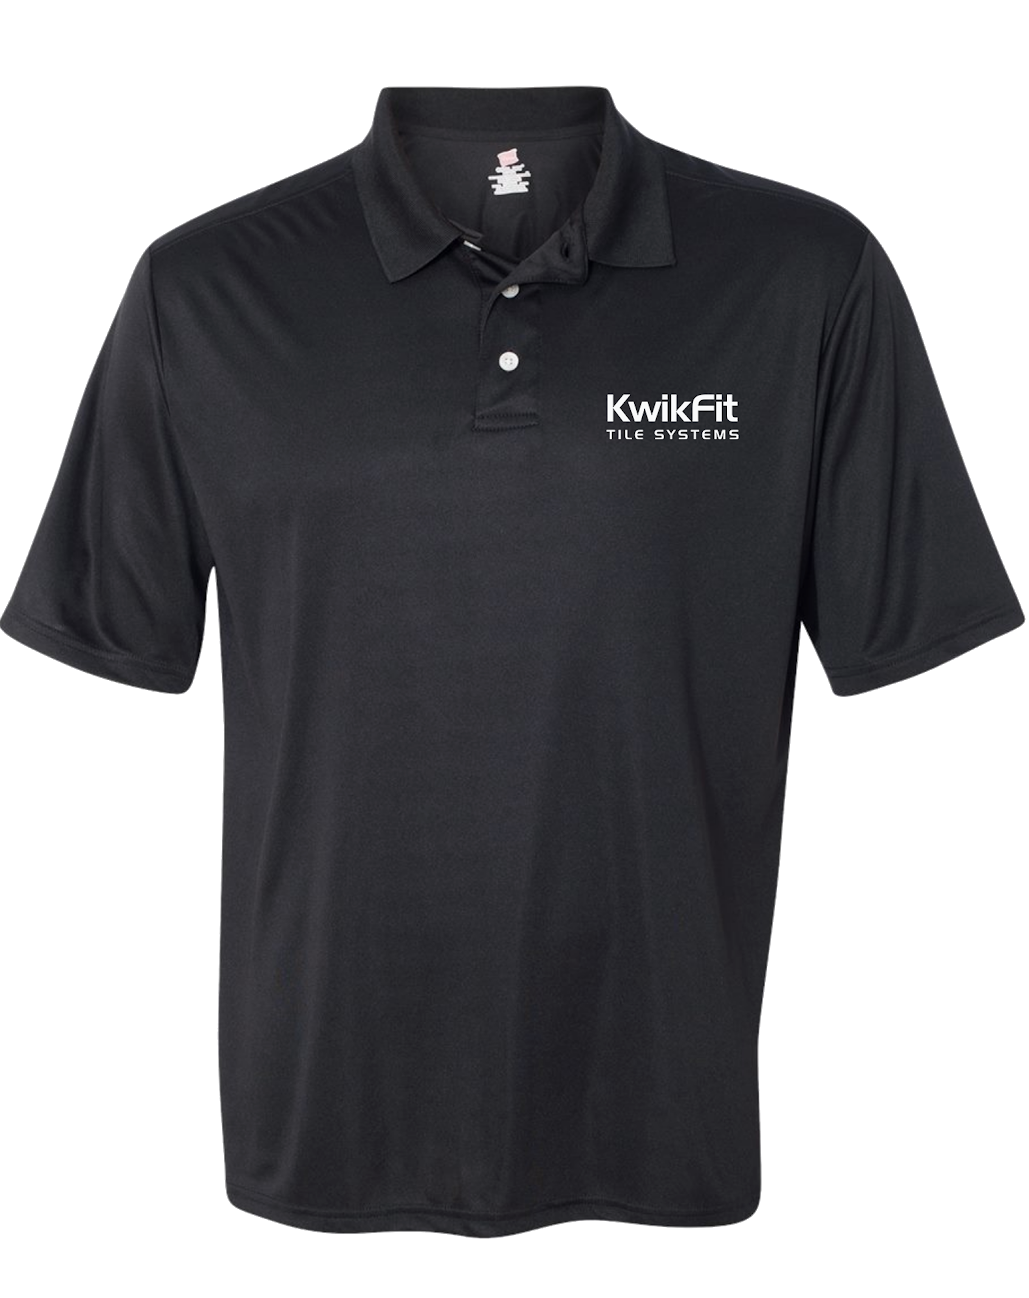 Kwikfit - Polo Shirt (Dri Fit)